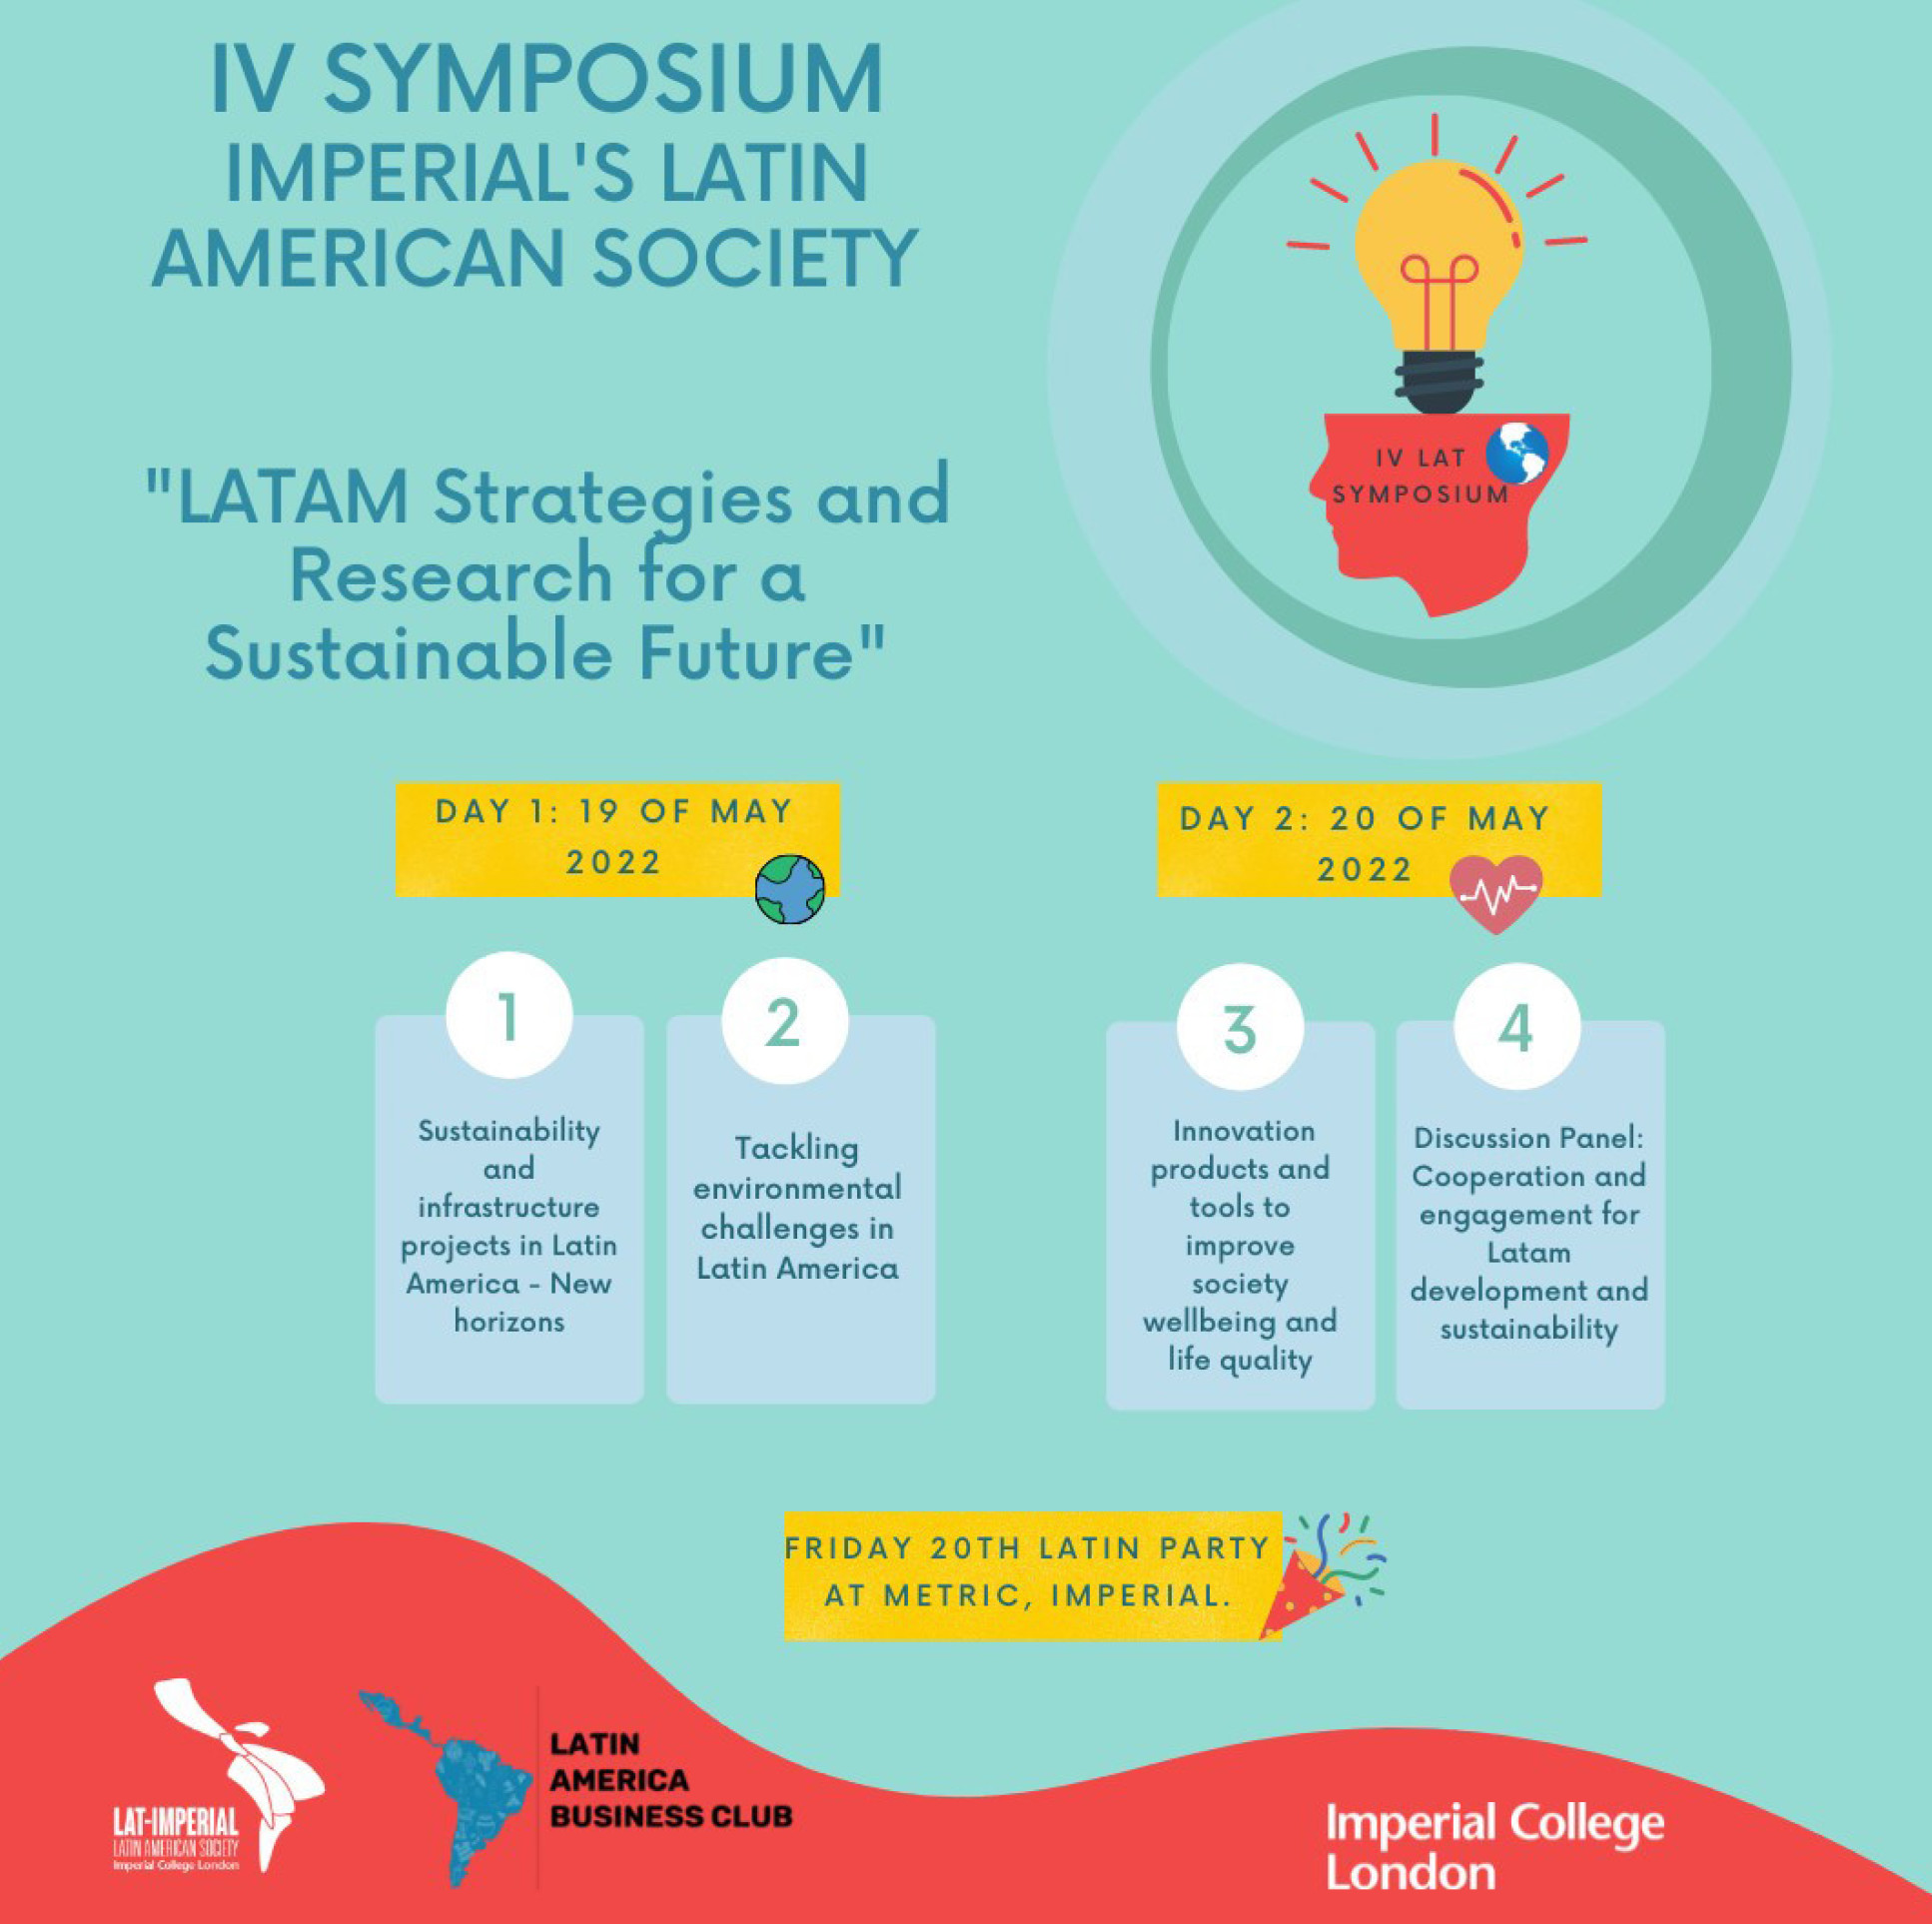 IV Symposium - Imperial's Latin American Society